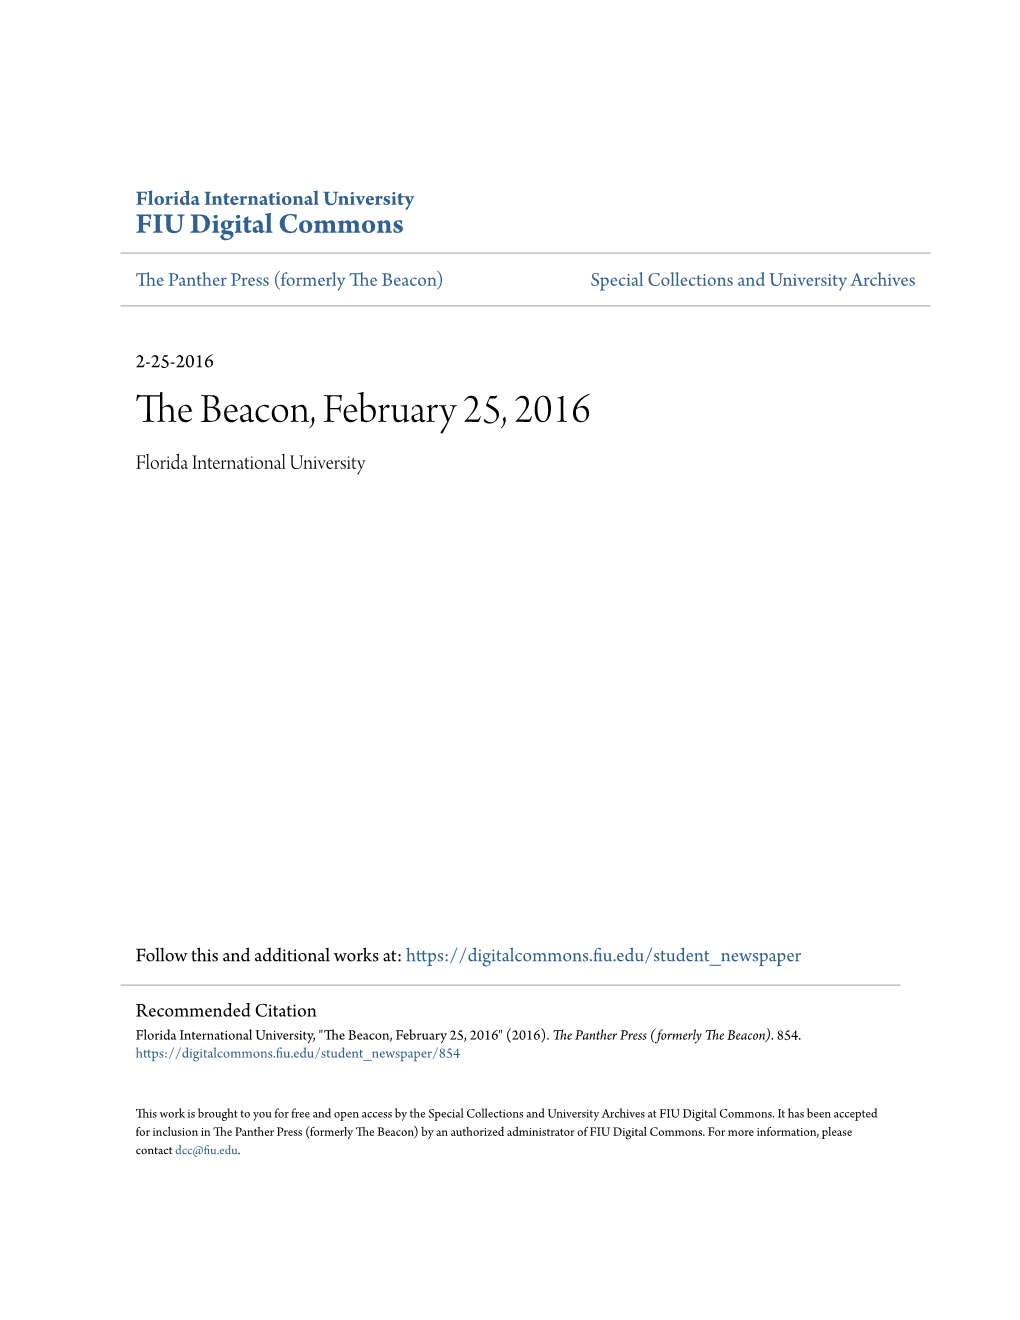 The Beacon, February 25, 2016 Florida International University